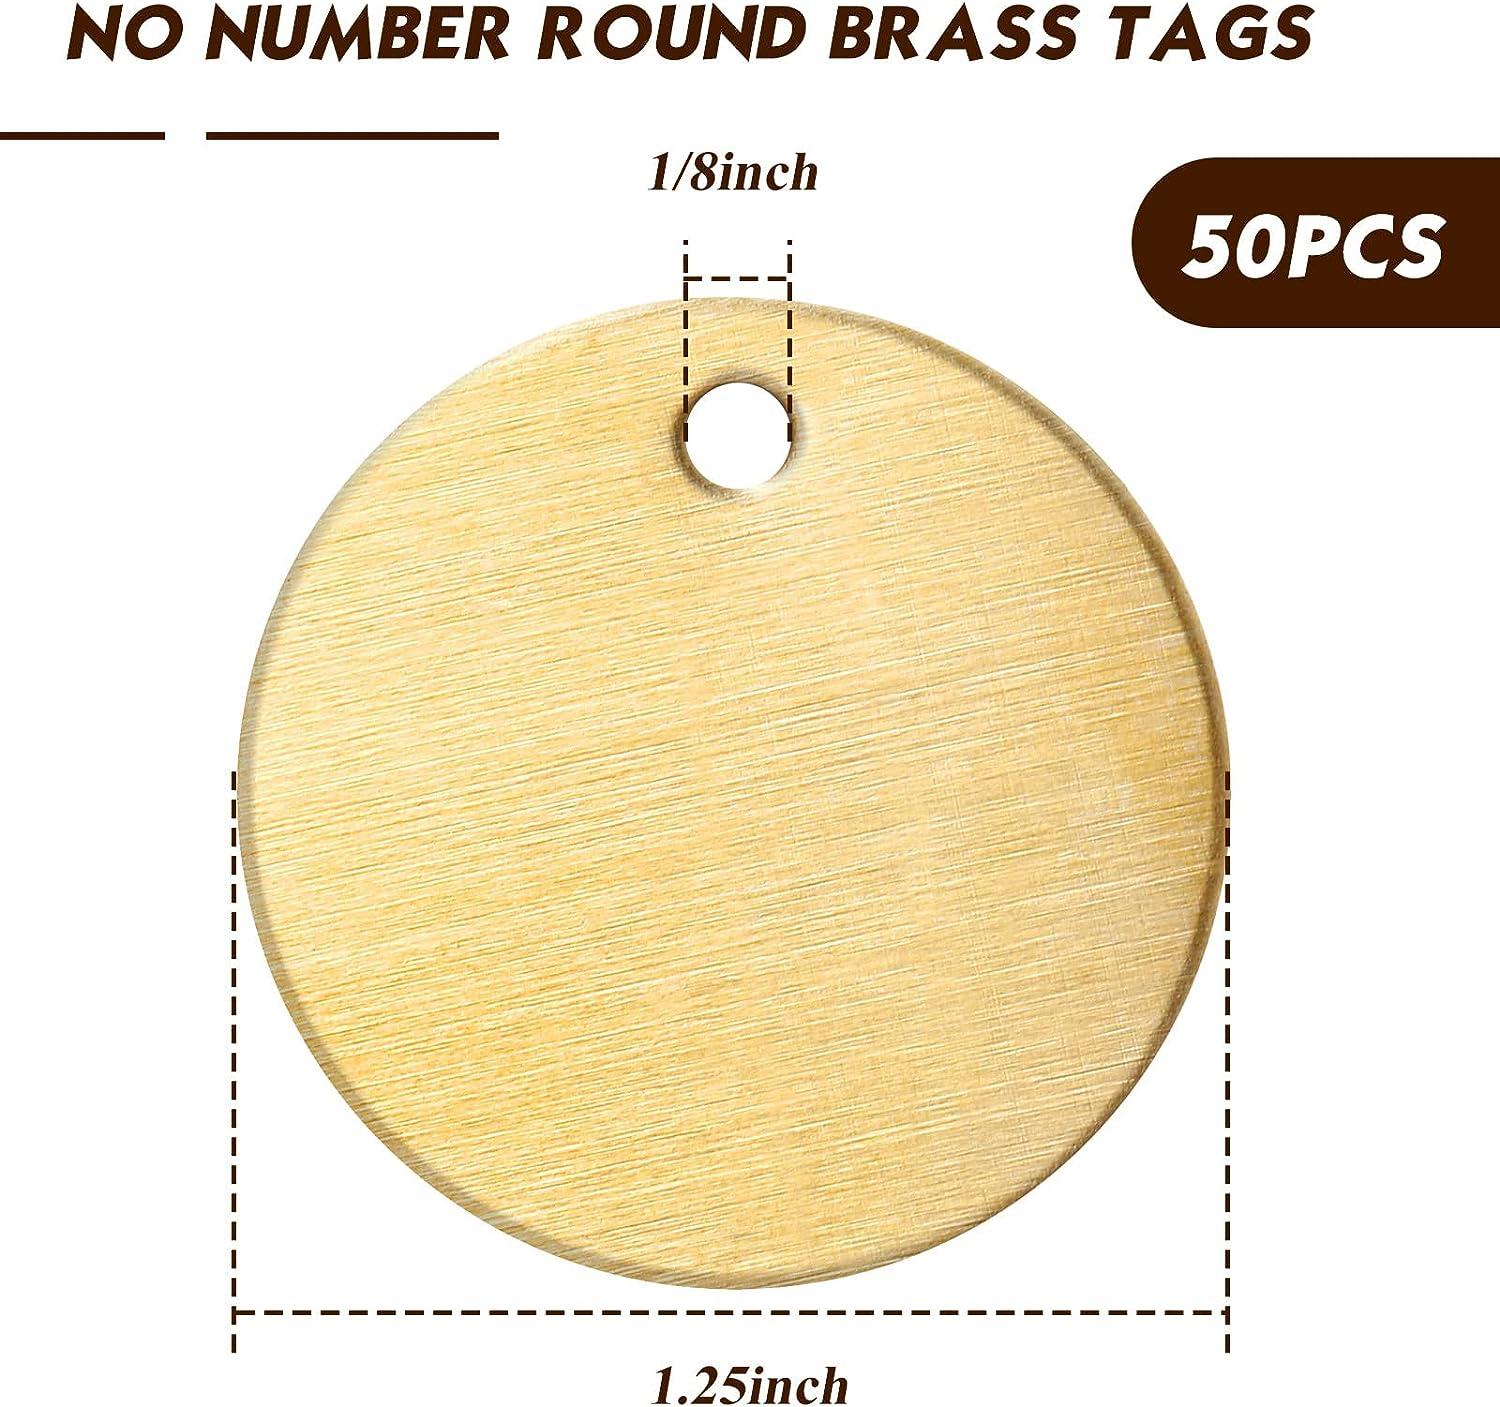 50 Pieces Round Brass Tags 1-1/4 Inch Diameter Blank Valve Tags